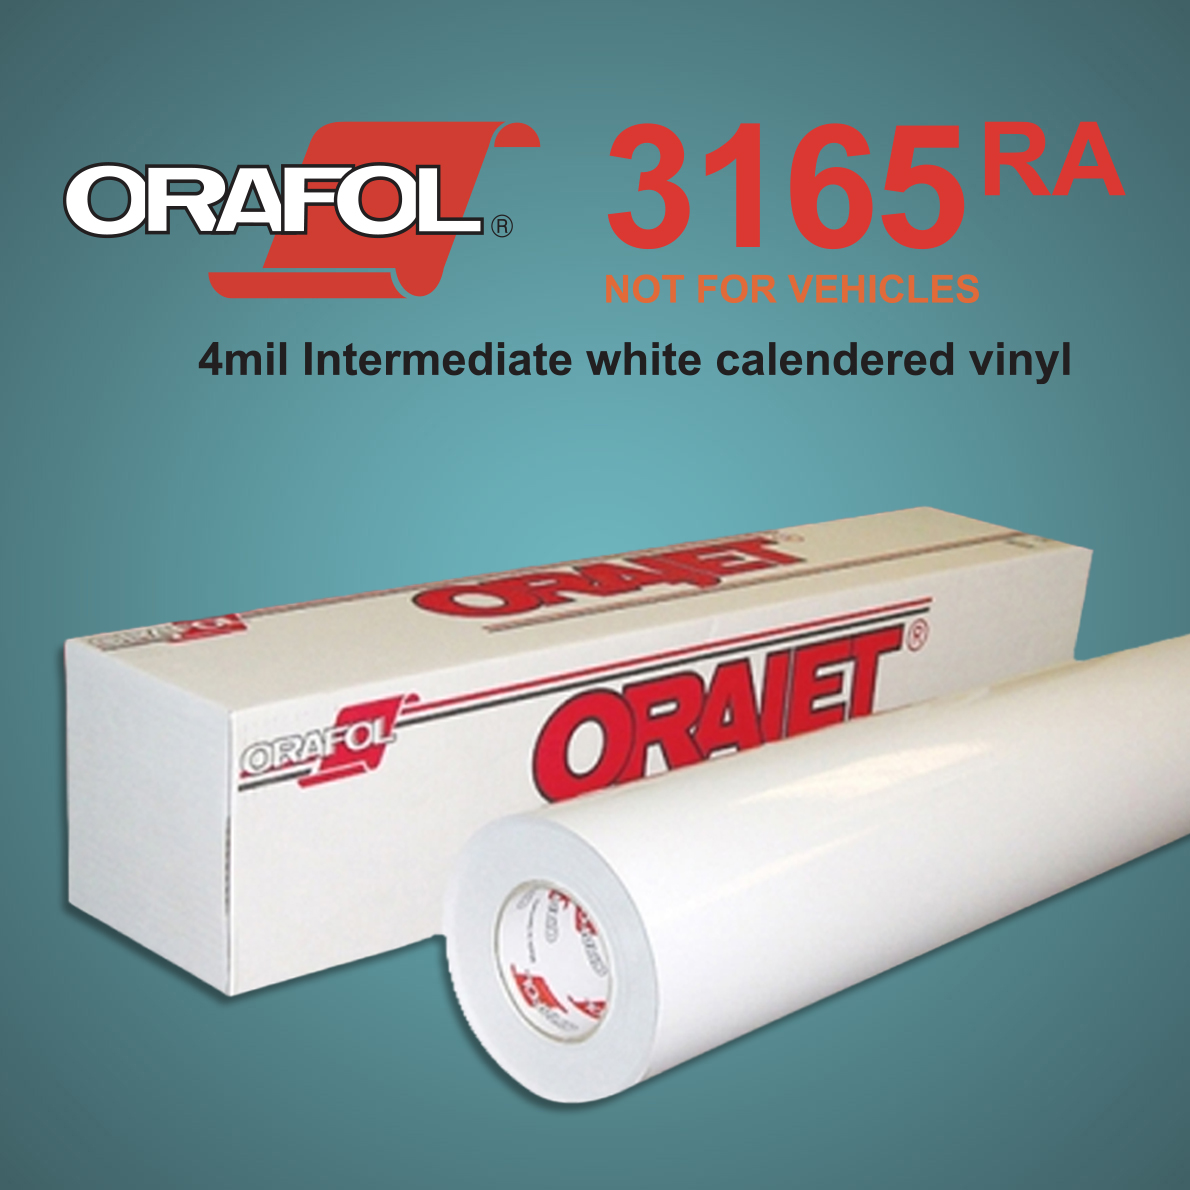 v5.SignMart > Printable Vinyl > SignMart Orajet ® 3165RA